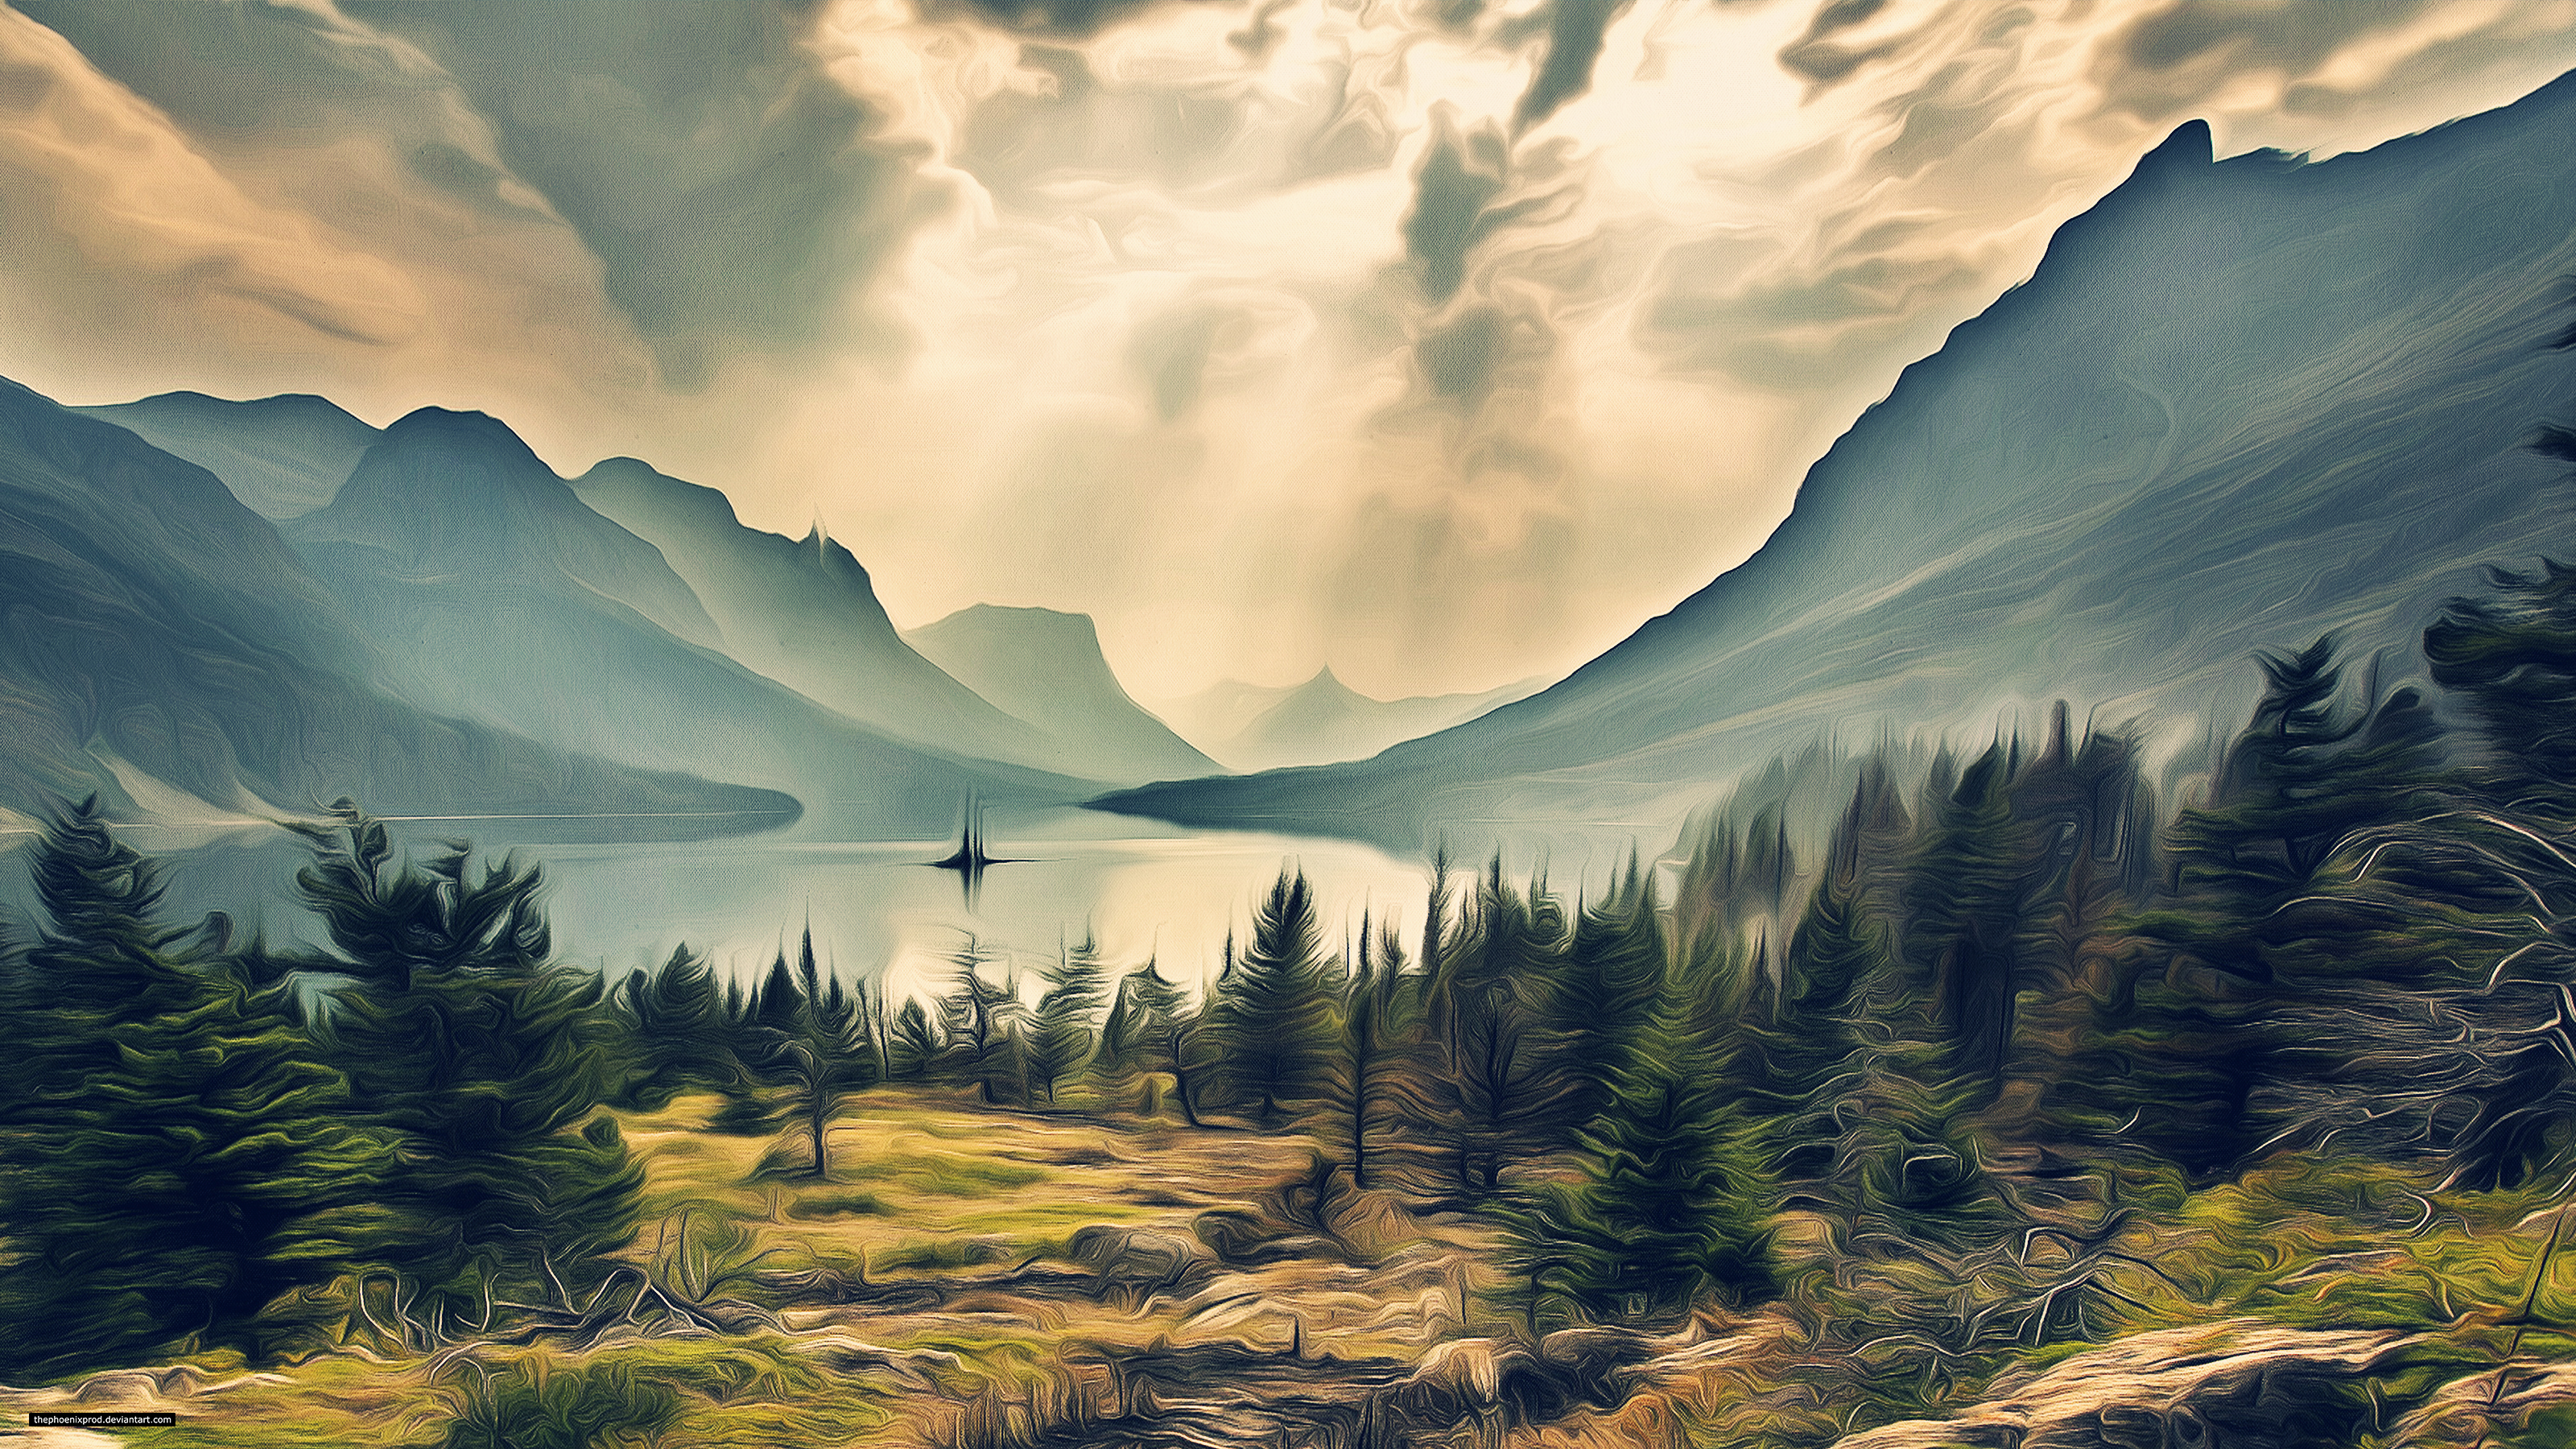 Nature Landscape (Wallpaper 4k) by thephoenixprod on DeviantArt